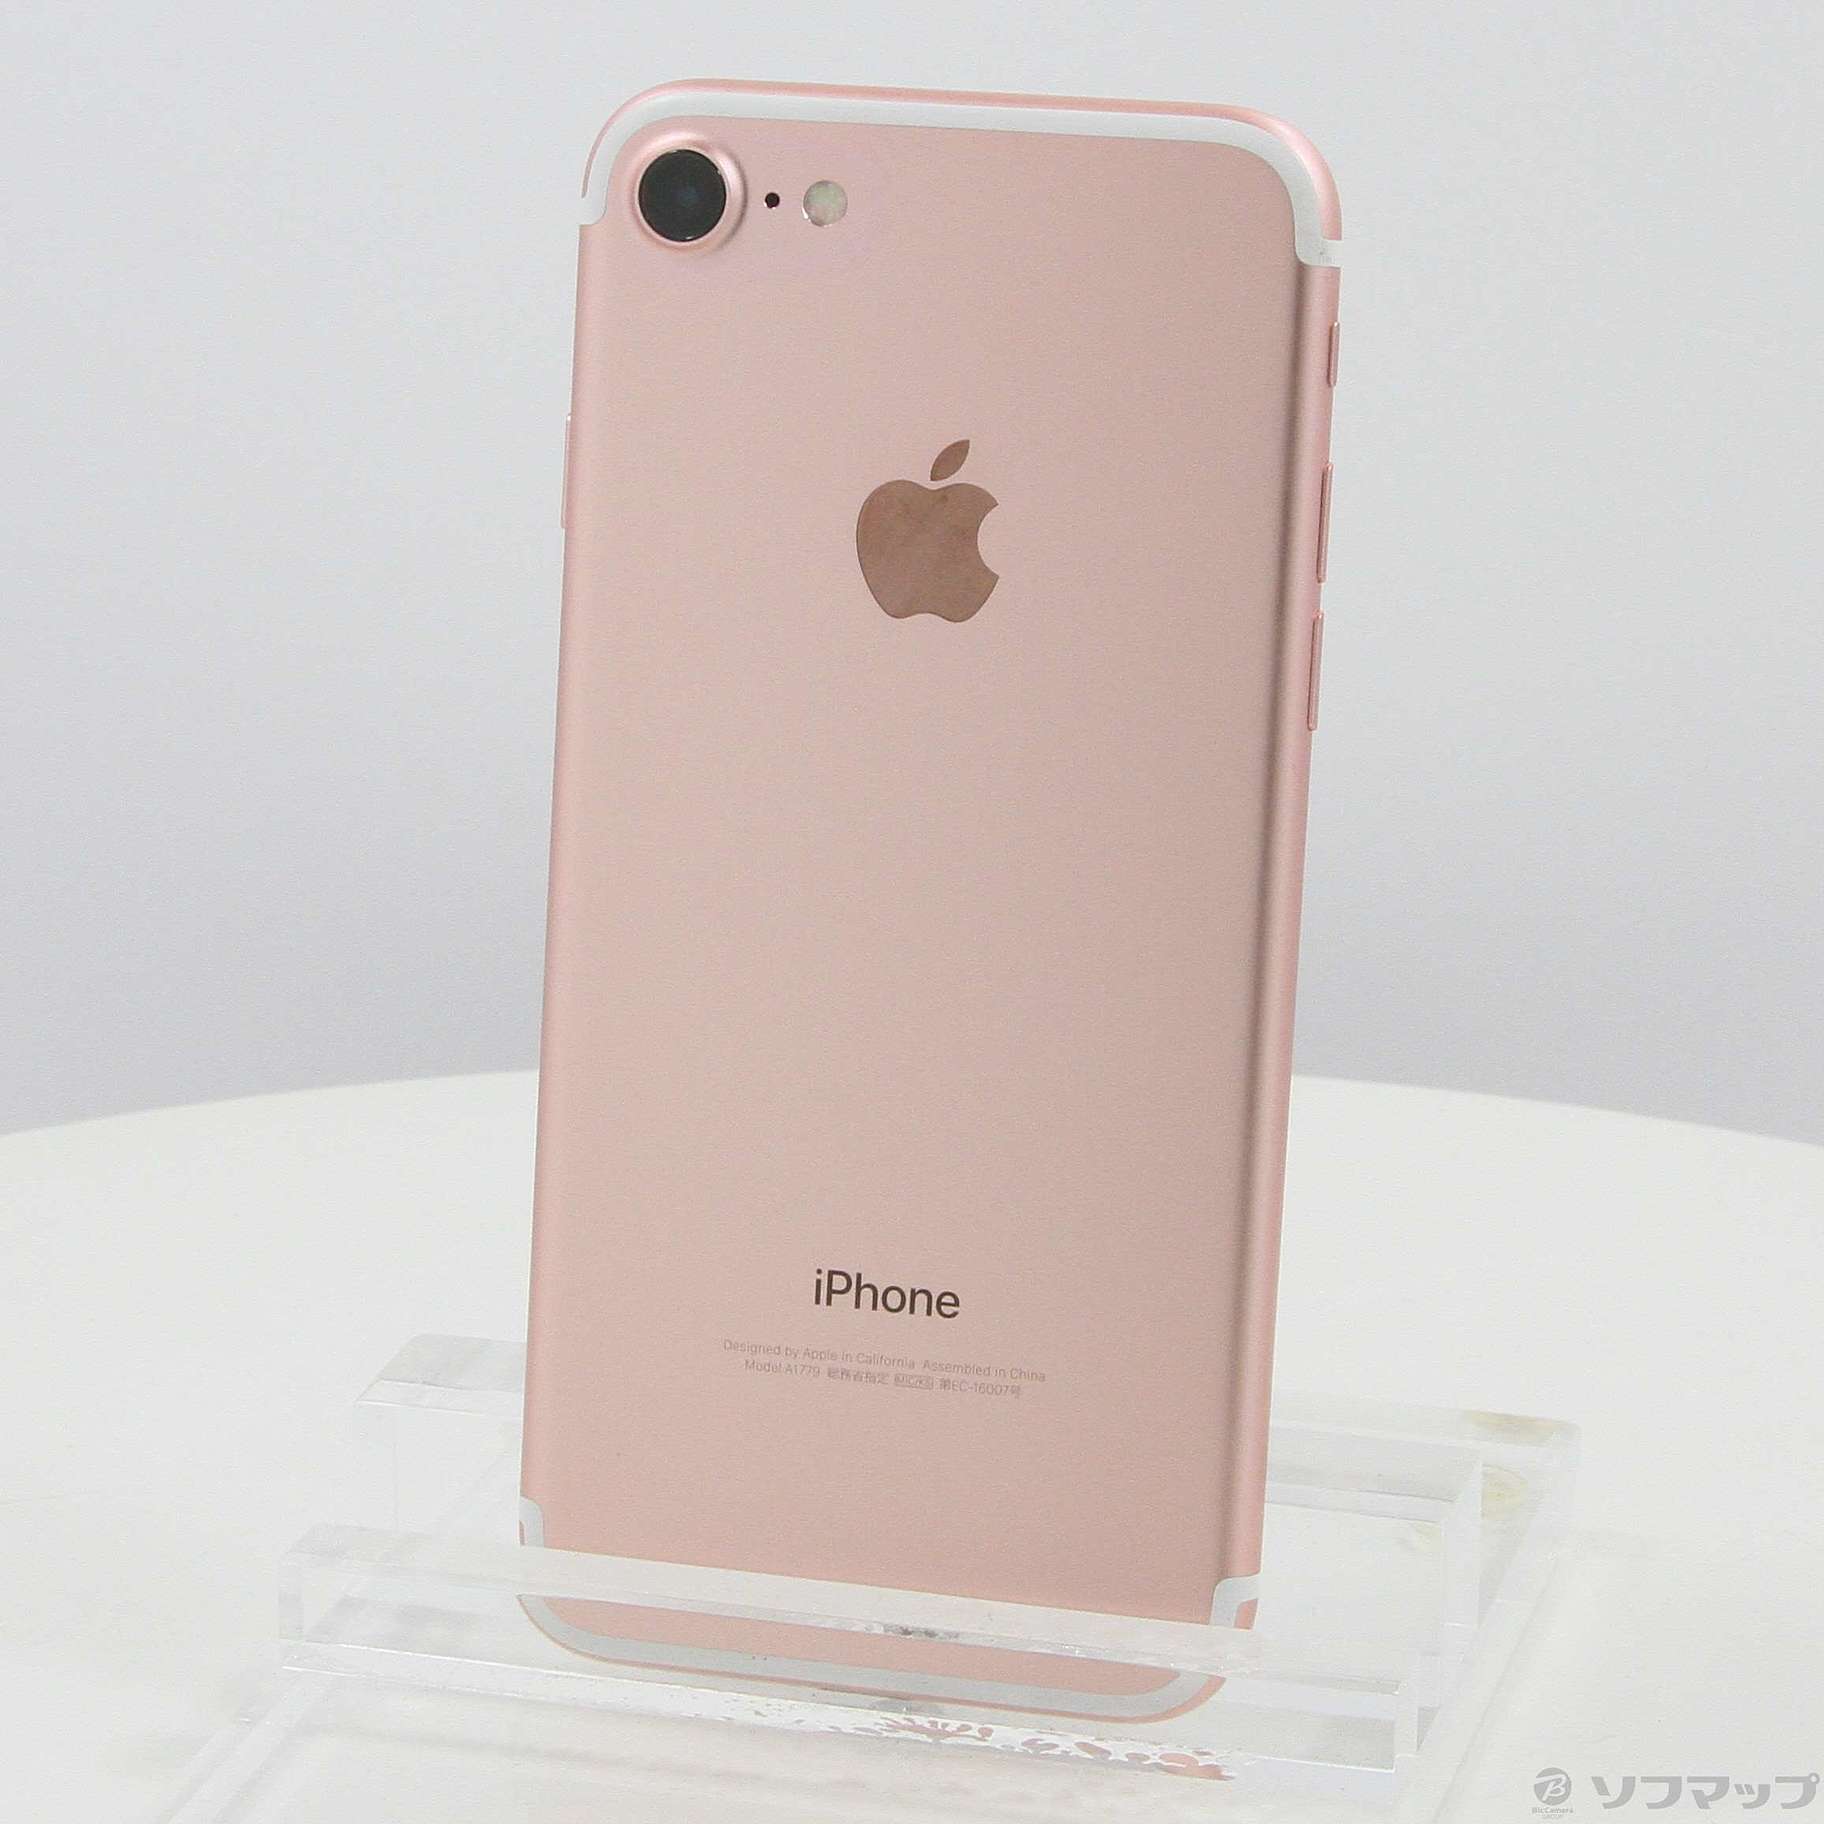 iPhone 7 Rose Gold 128 GB Softbank | www.fleettracktz.com